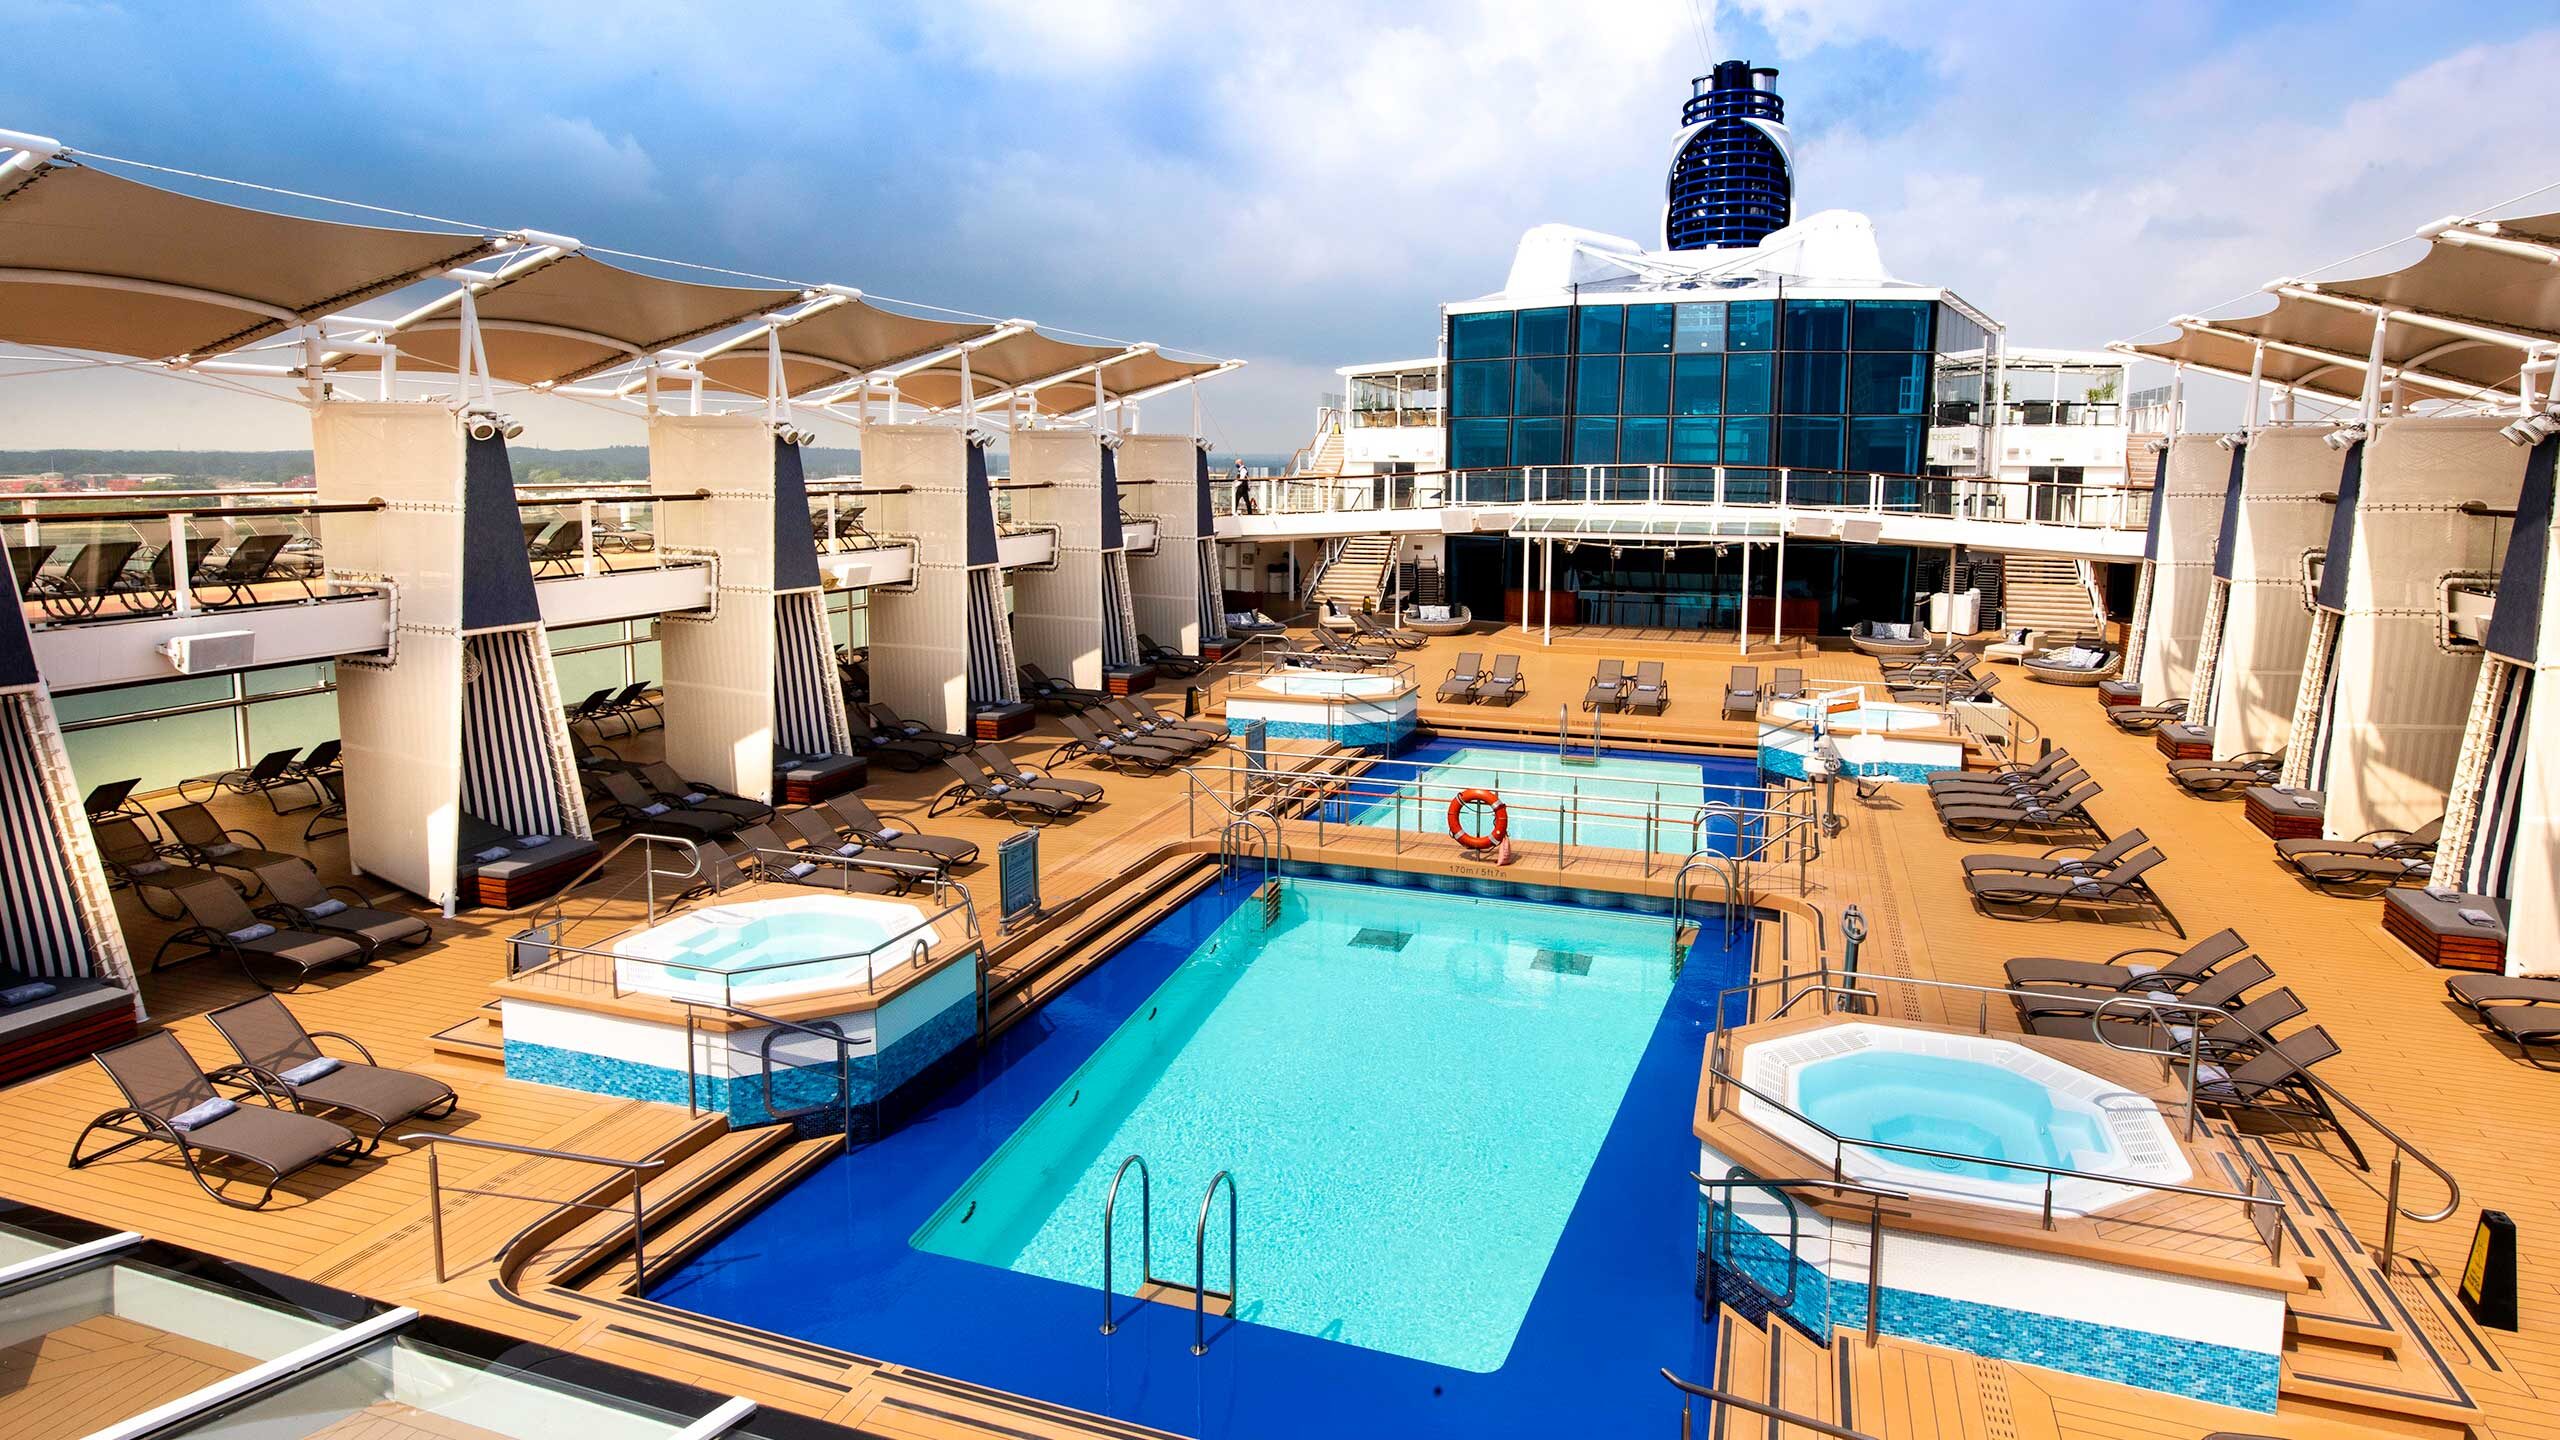 celebrity cruise silhouette location